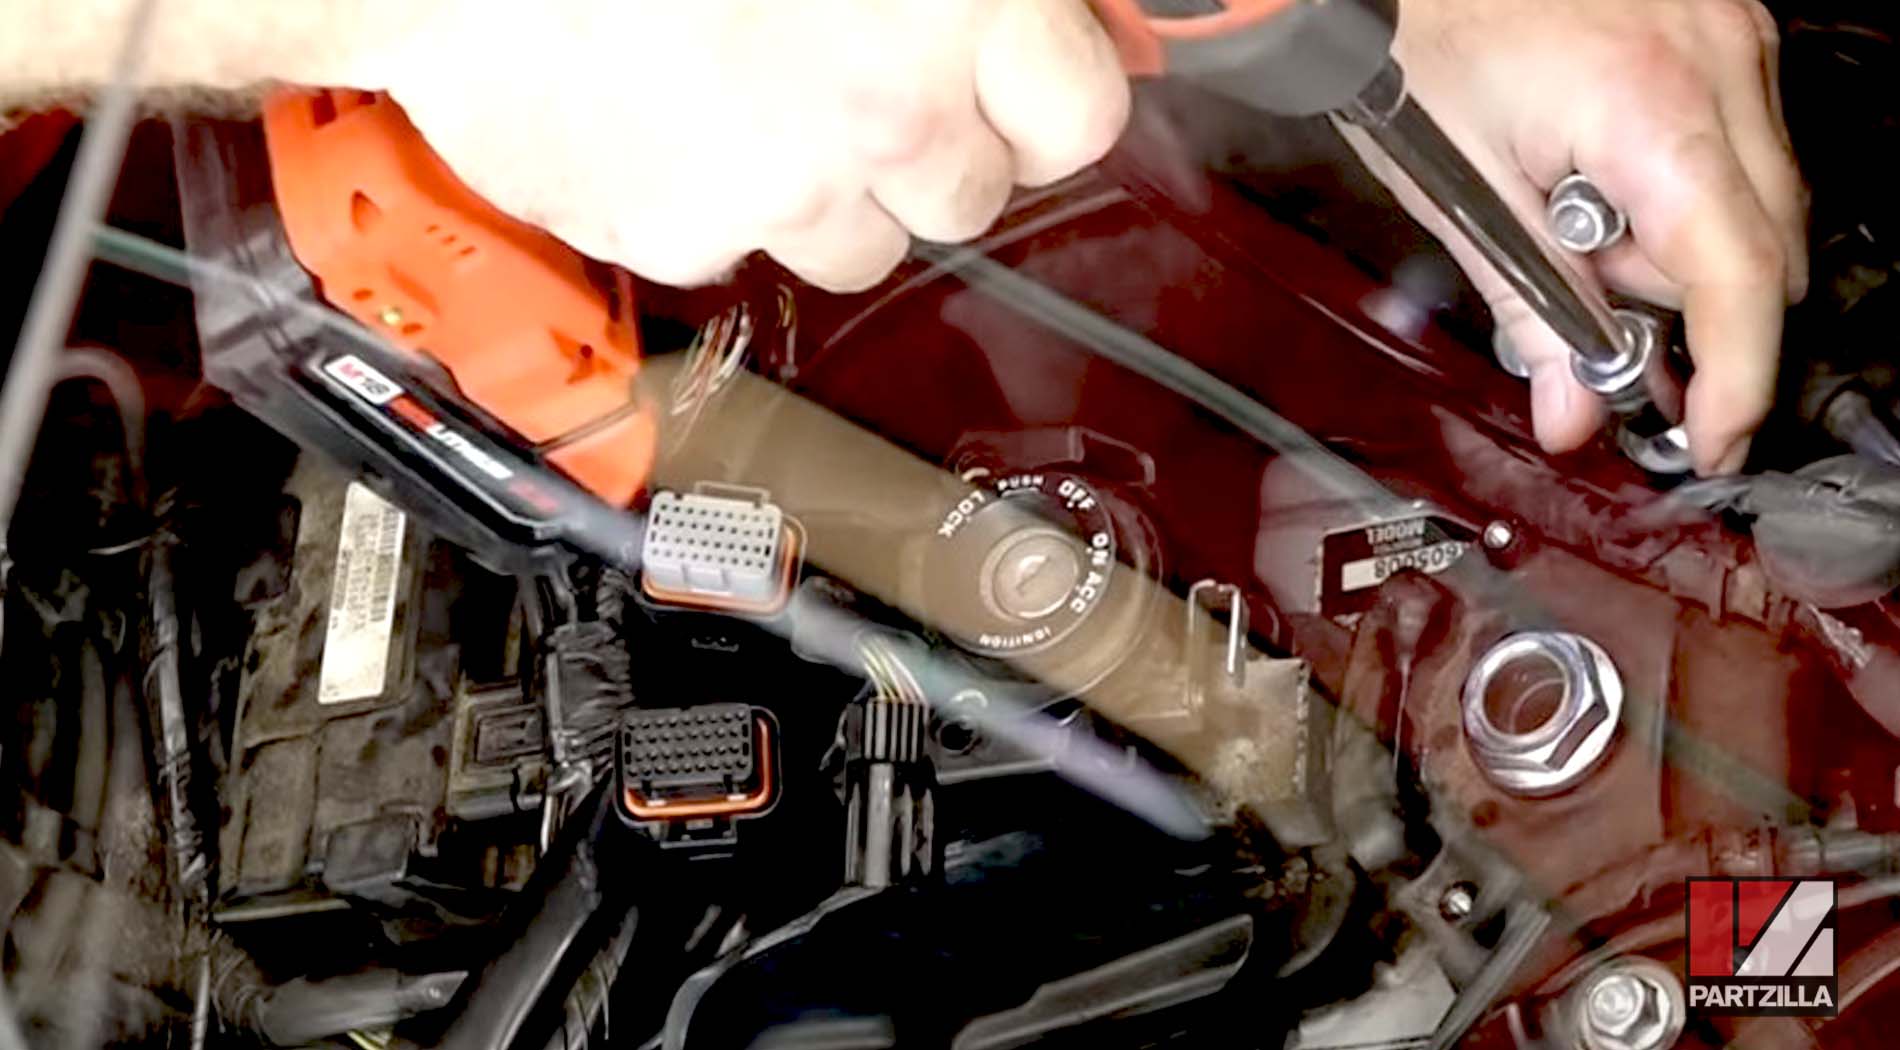 Honda Goldwing motorcycle steering bearing replacement teardown